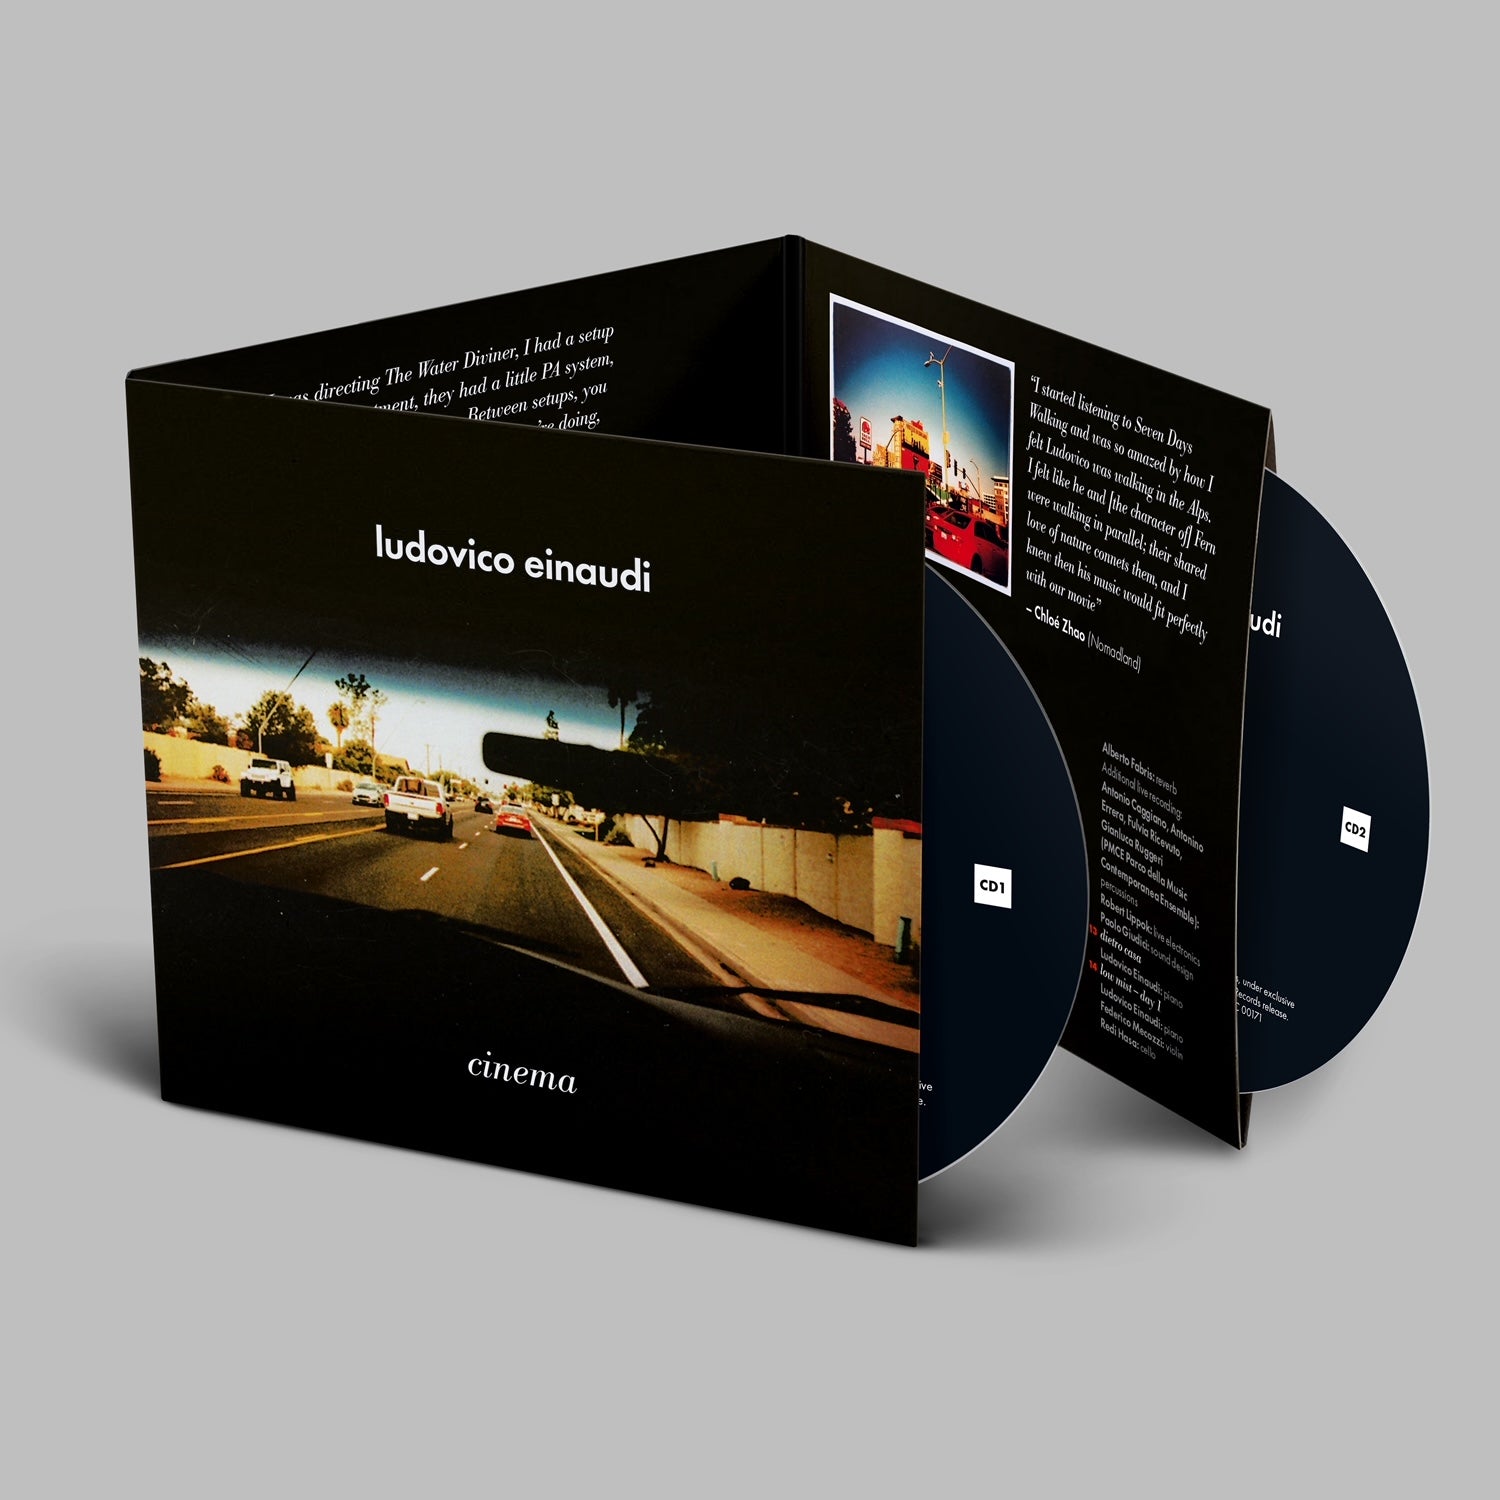 Ludovico Einaudi: albums, songs, playlists